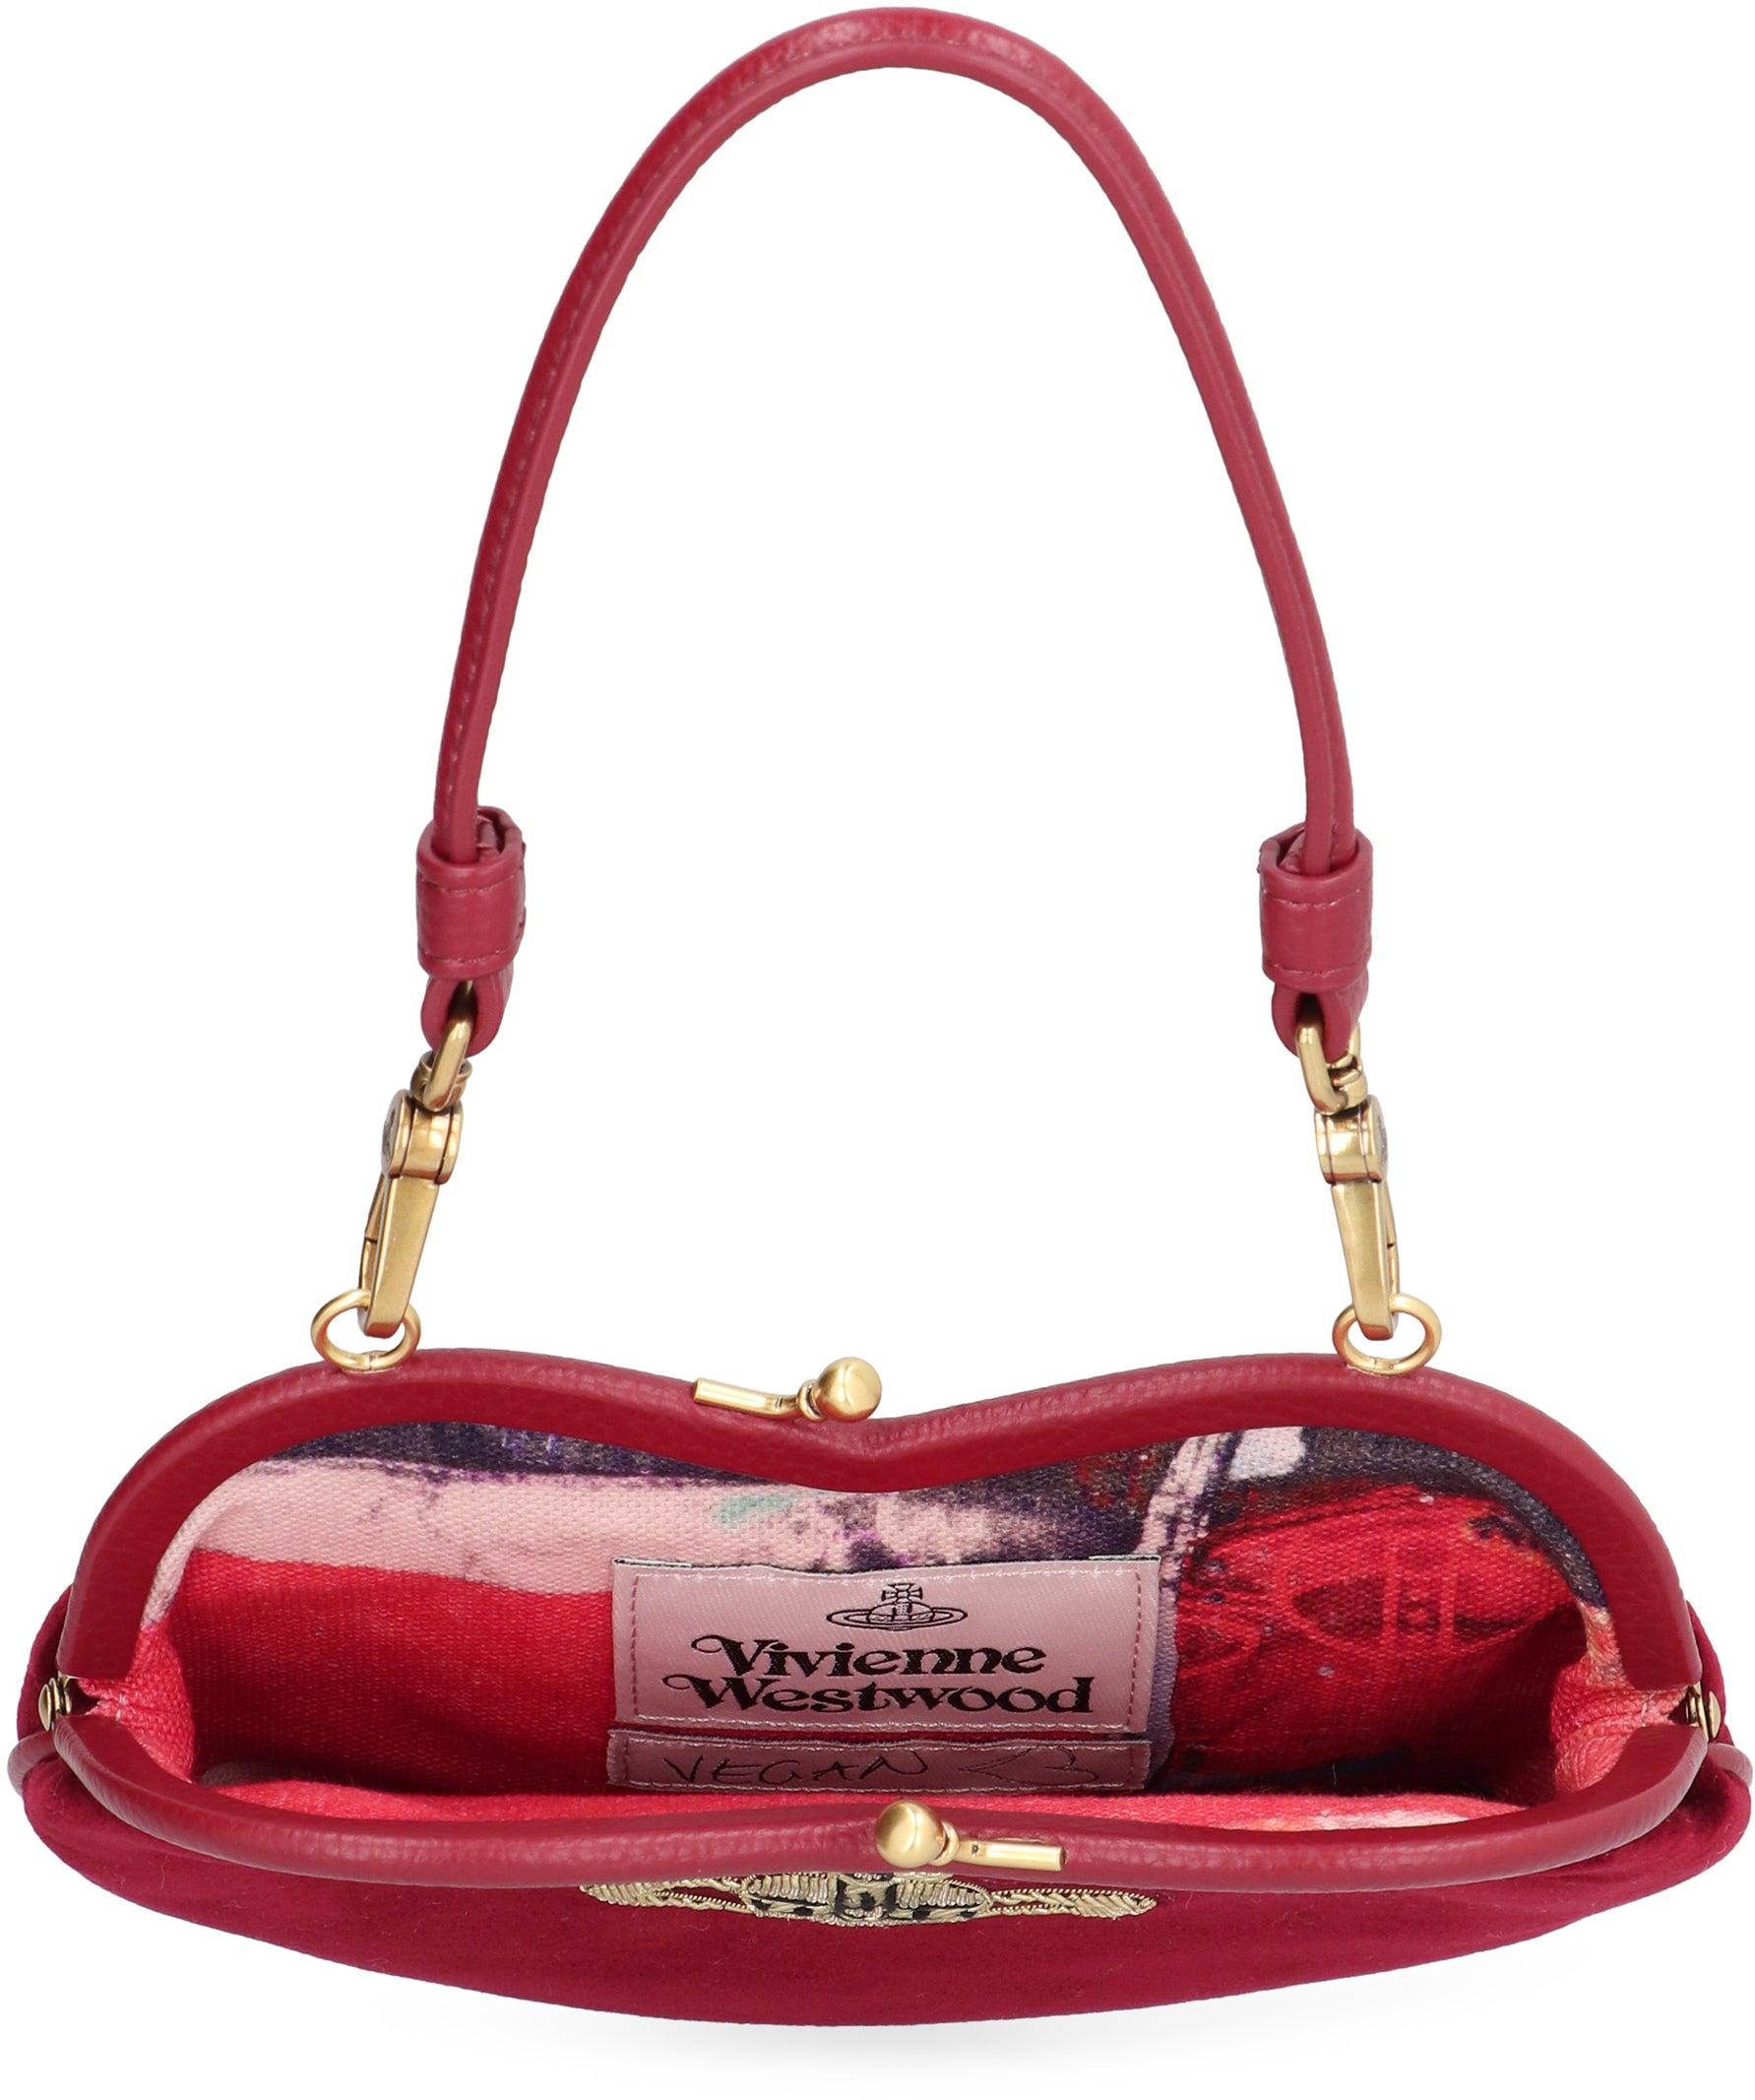 Vivienne Westwood Belle Velvet Clutch Bag in Red